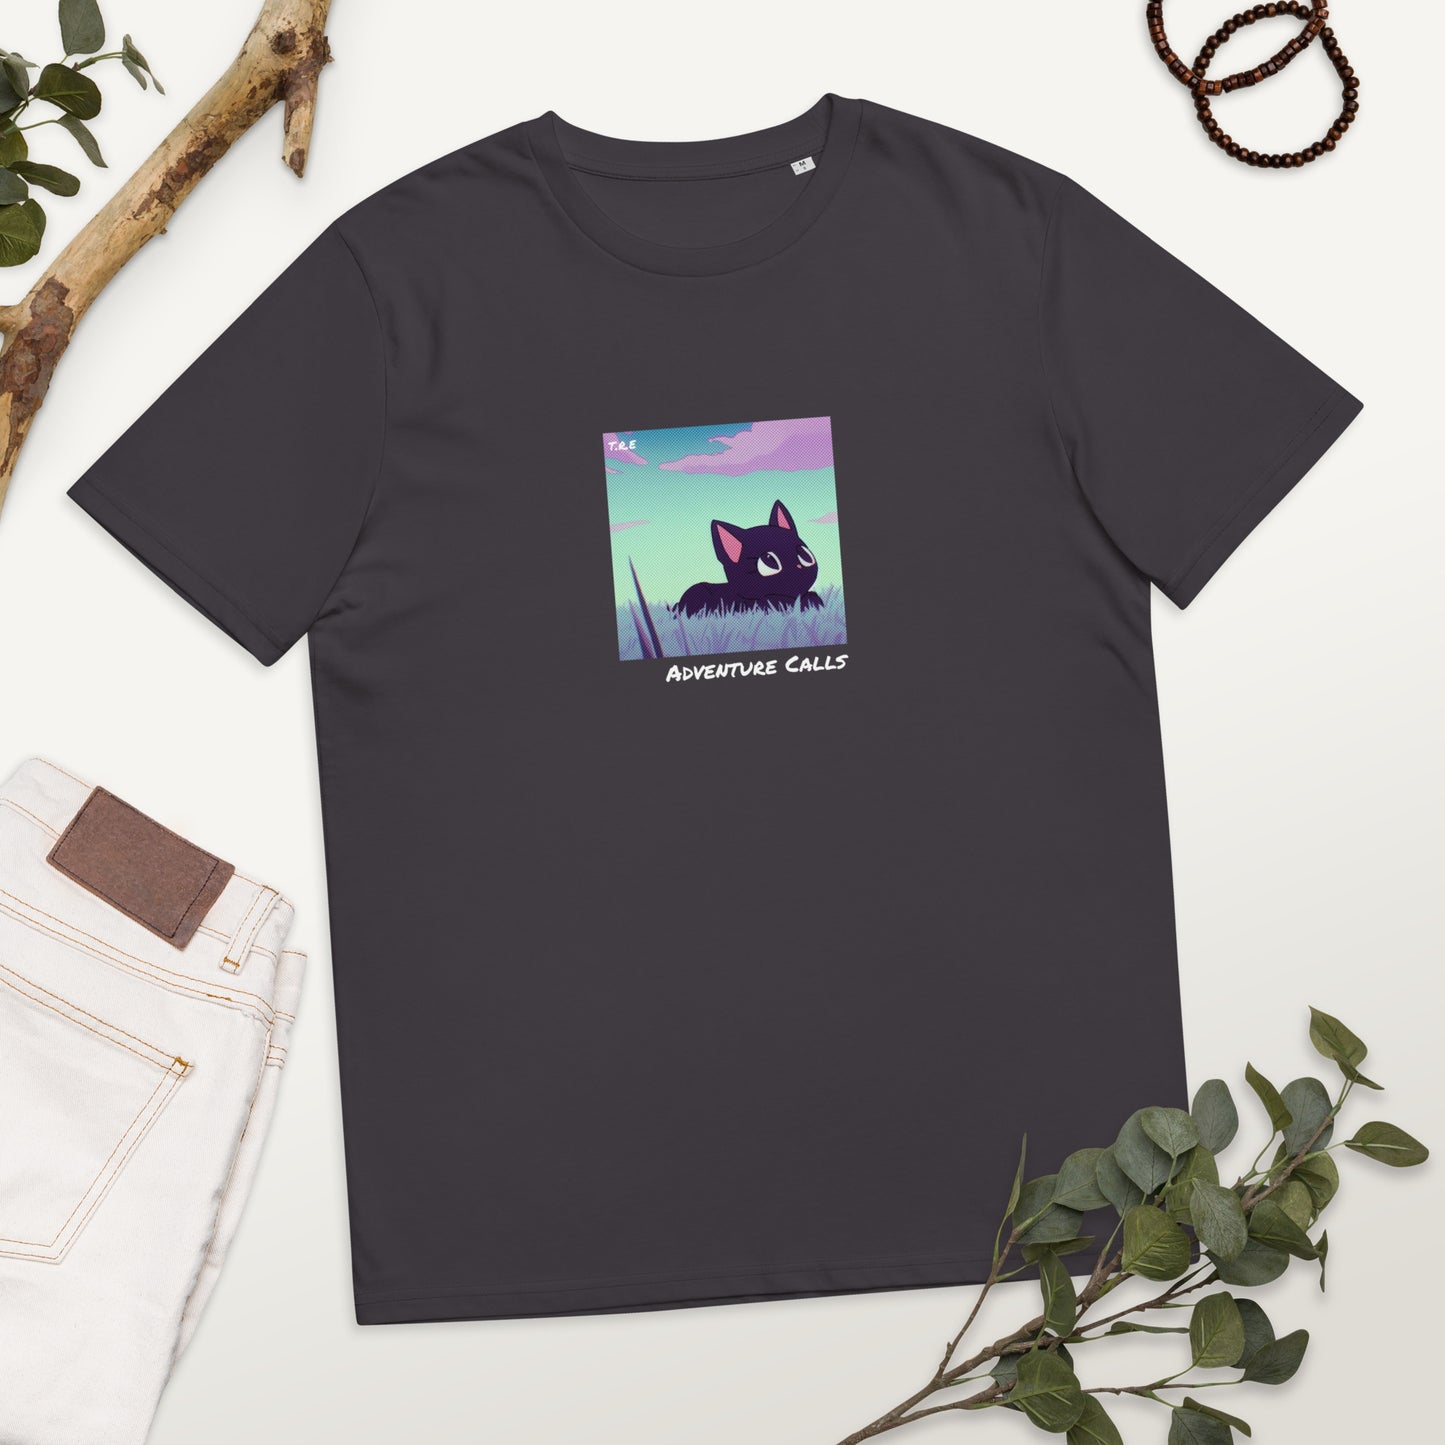 Unisex Organic Cotton T-Shirt - Adventure Calls